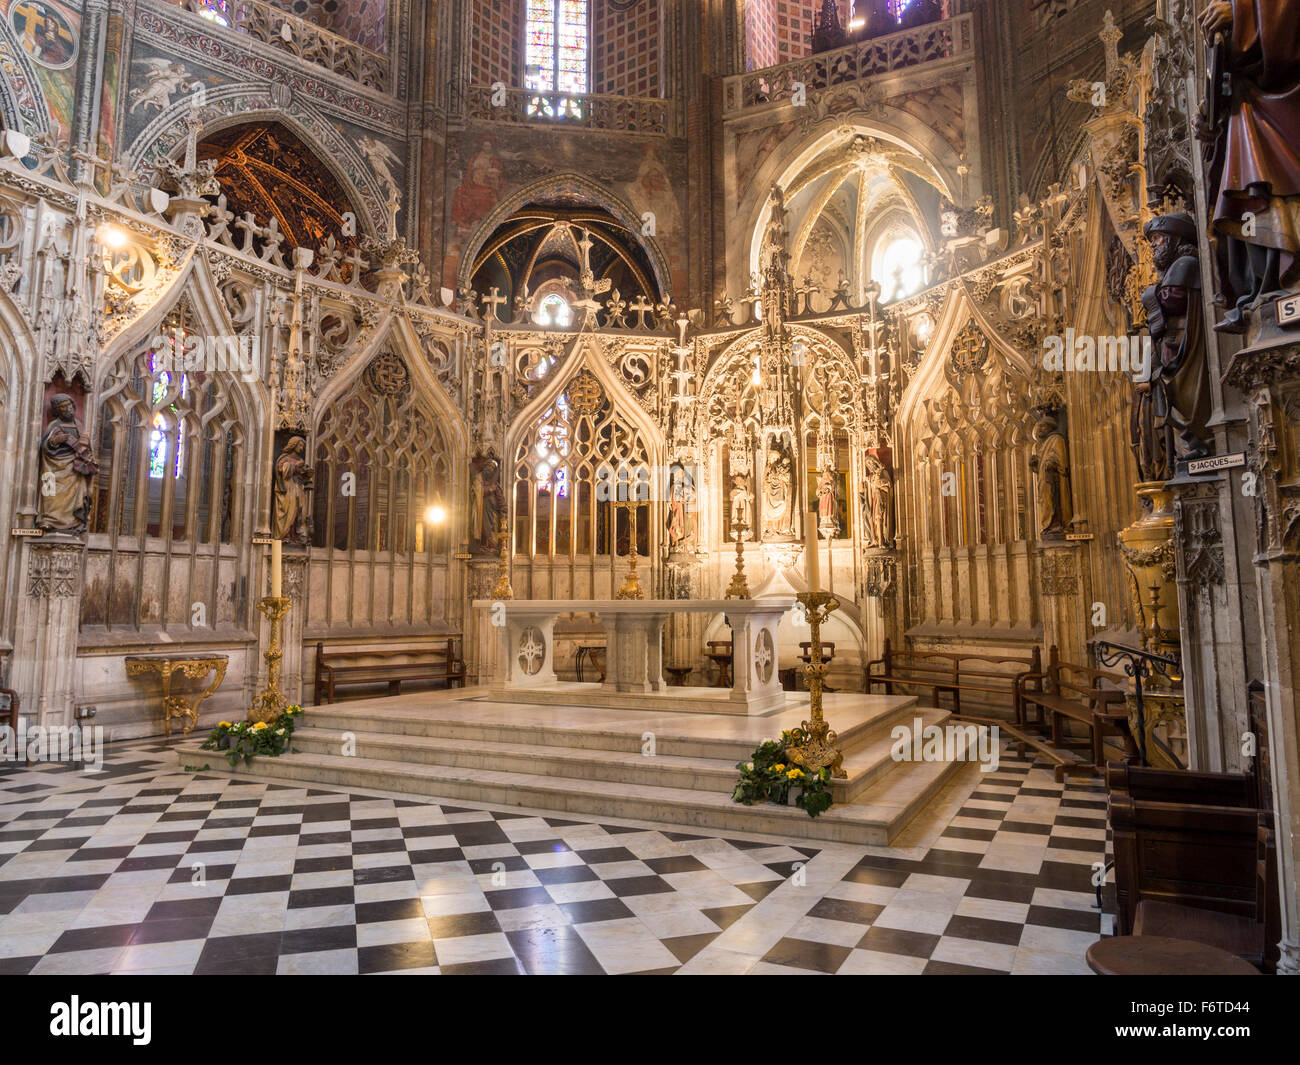 Coro de la Catedral de Albi Altar. Altar detallada en la parte trasera del coro de la catedral de Albi. Saint Cecil Catedral, Albi, Tarn, Franc Foto de stock